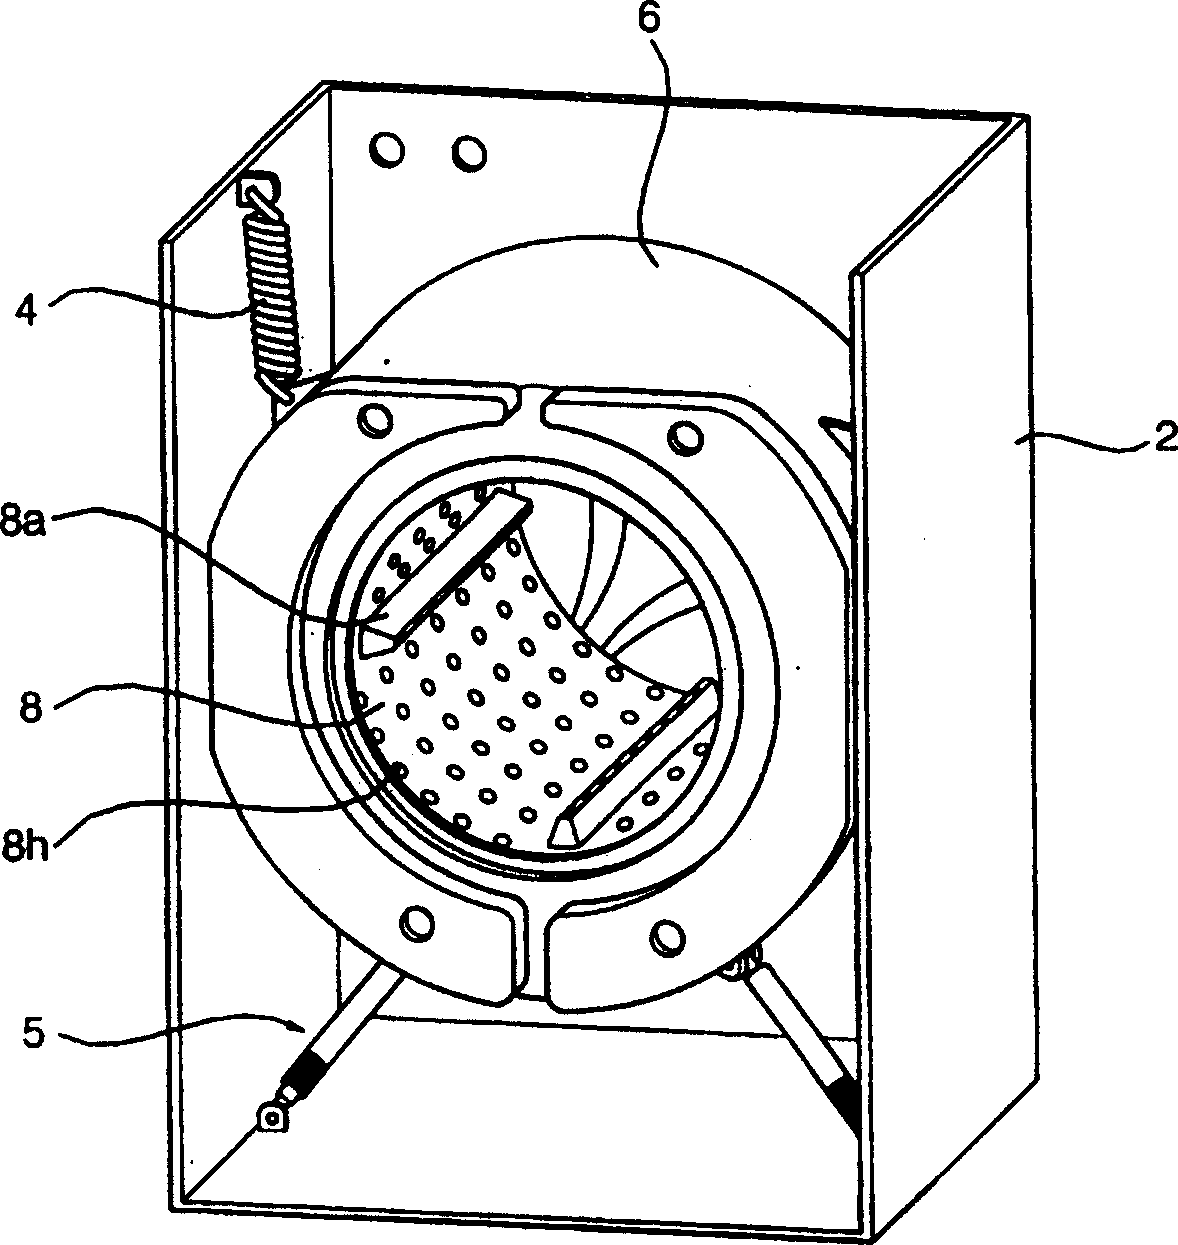 Jet type drum washing machine